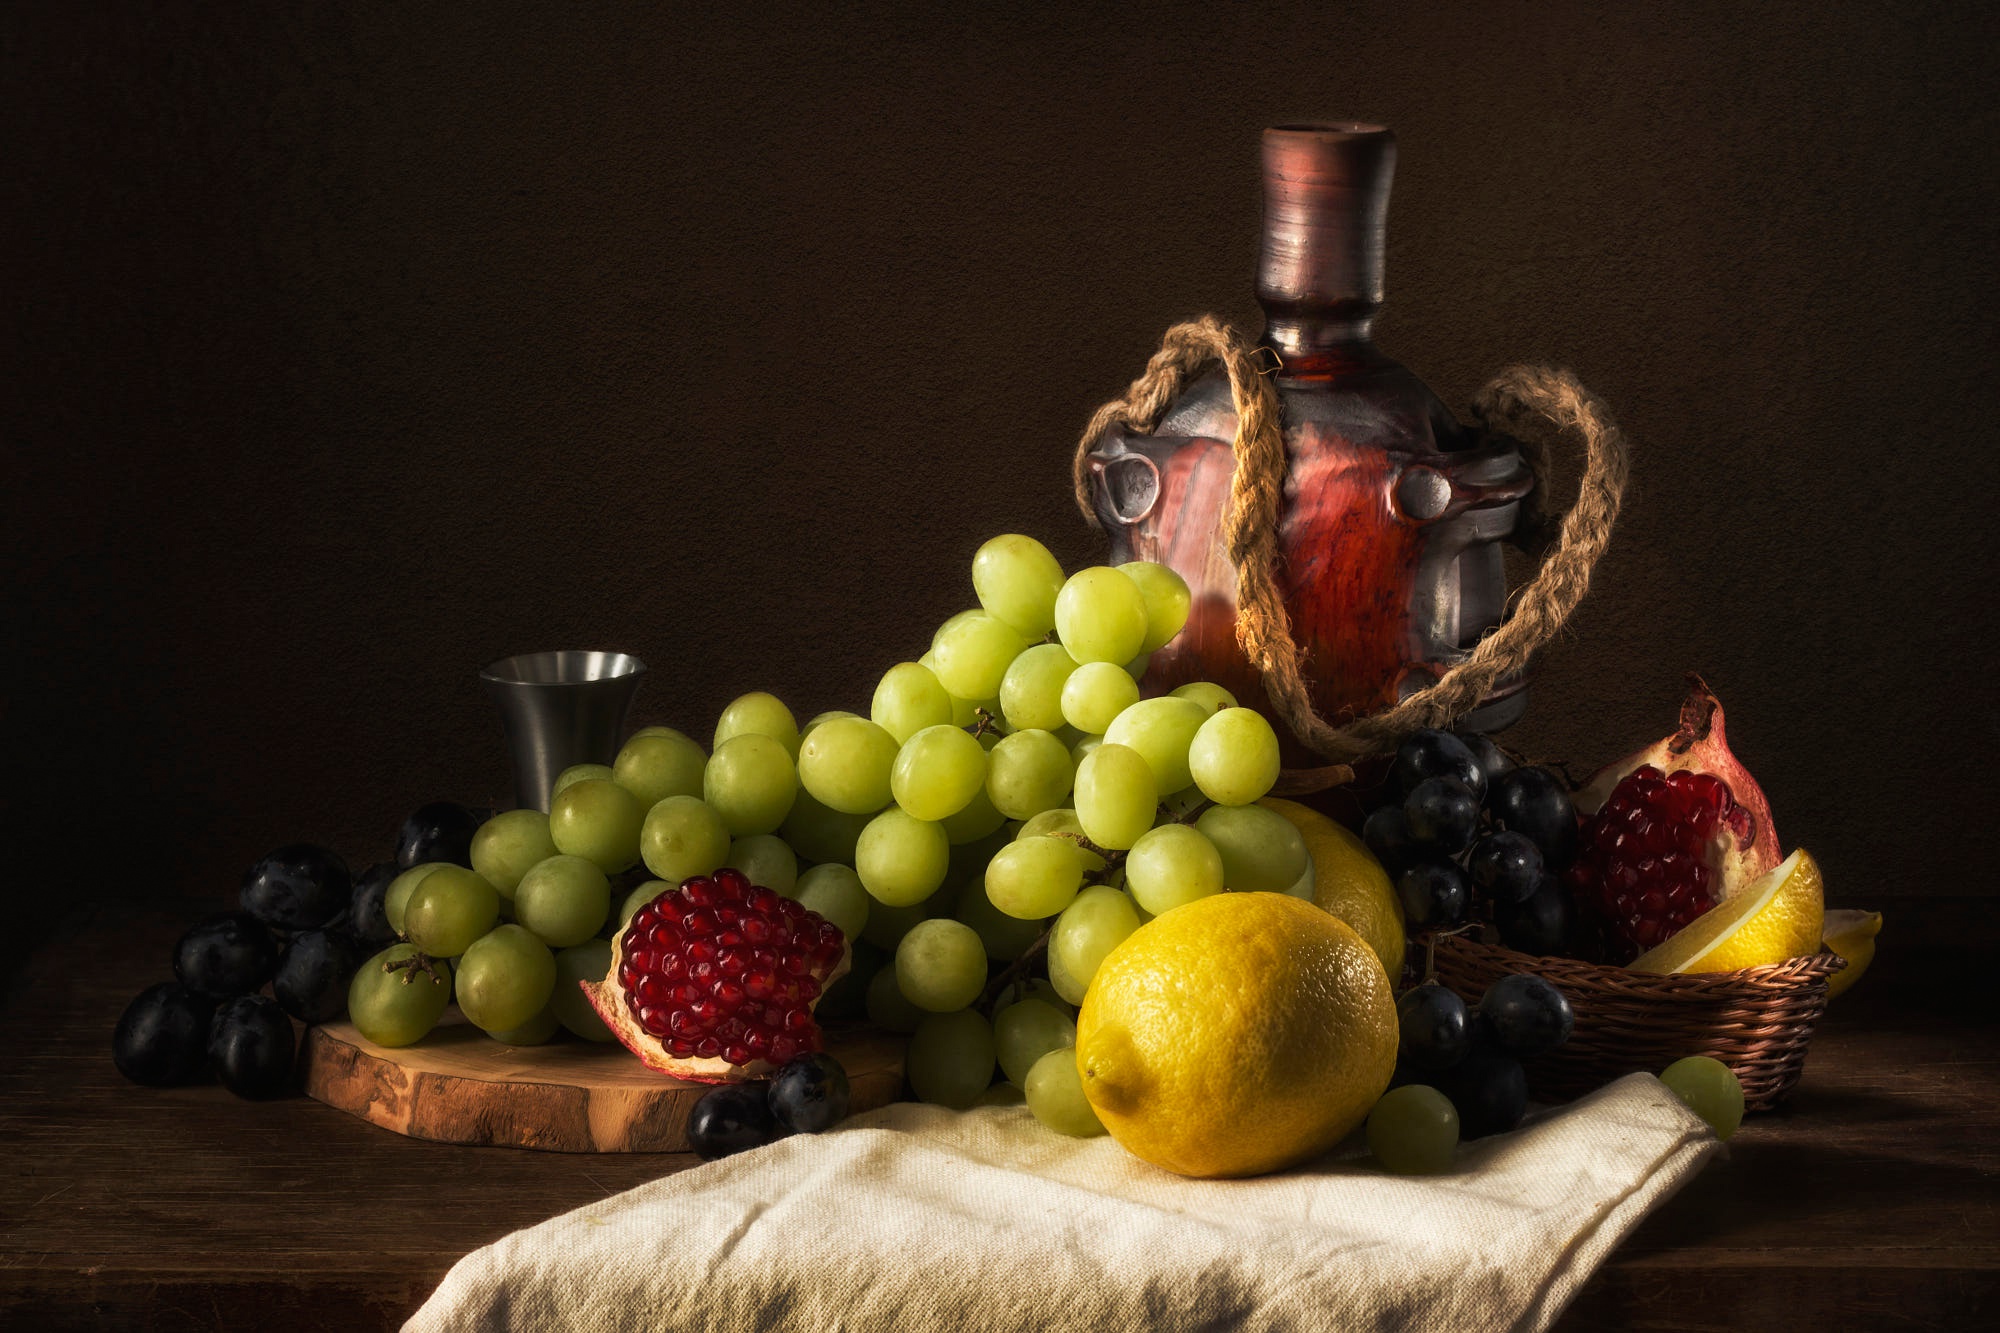 Виноградно лимонного вина. Бен Николсон натюрморт виноград. Натюрморт с фруктами. Натюрморт с виноградом. Натюрморт с гранатами и виноградом.